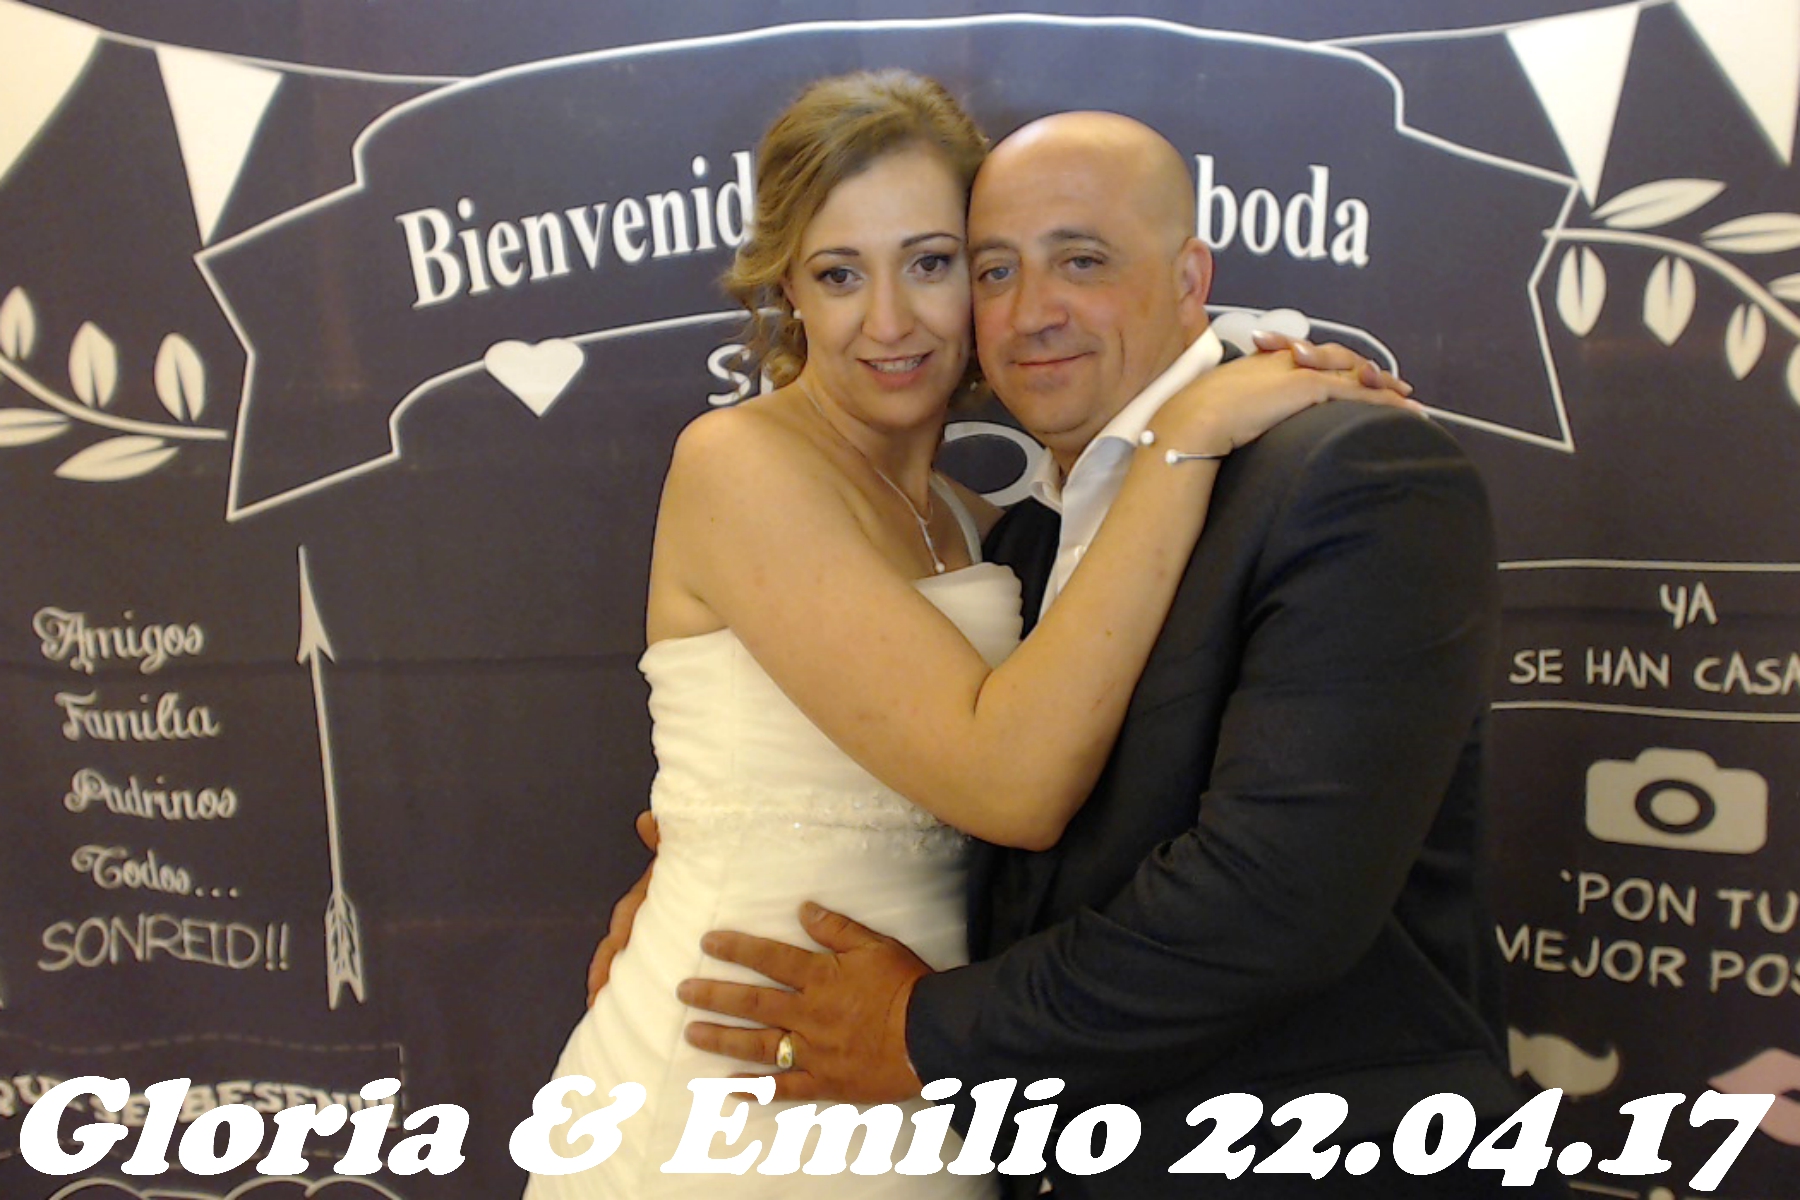 Boda Gloria & Emilio 22.04.17